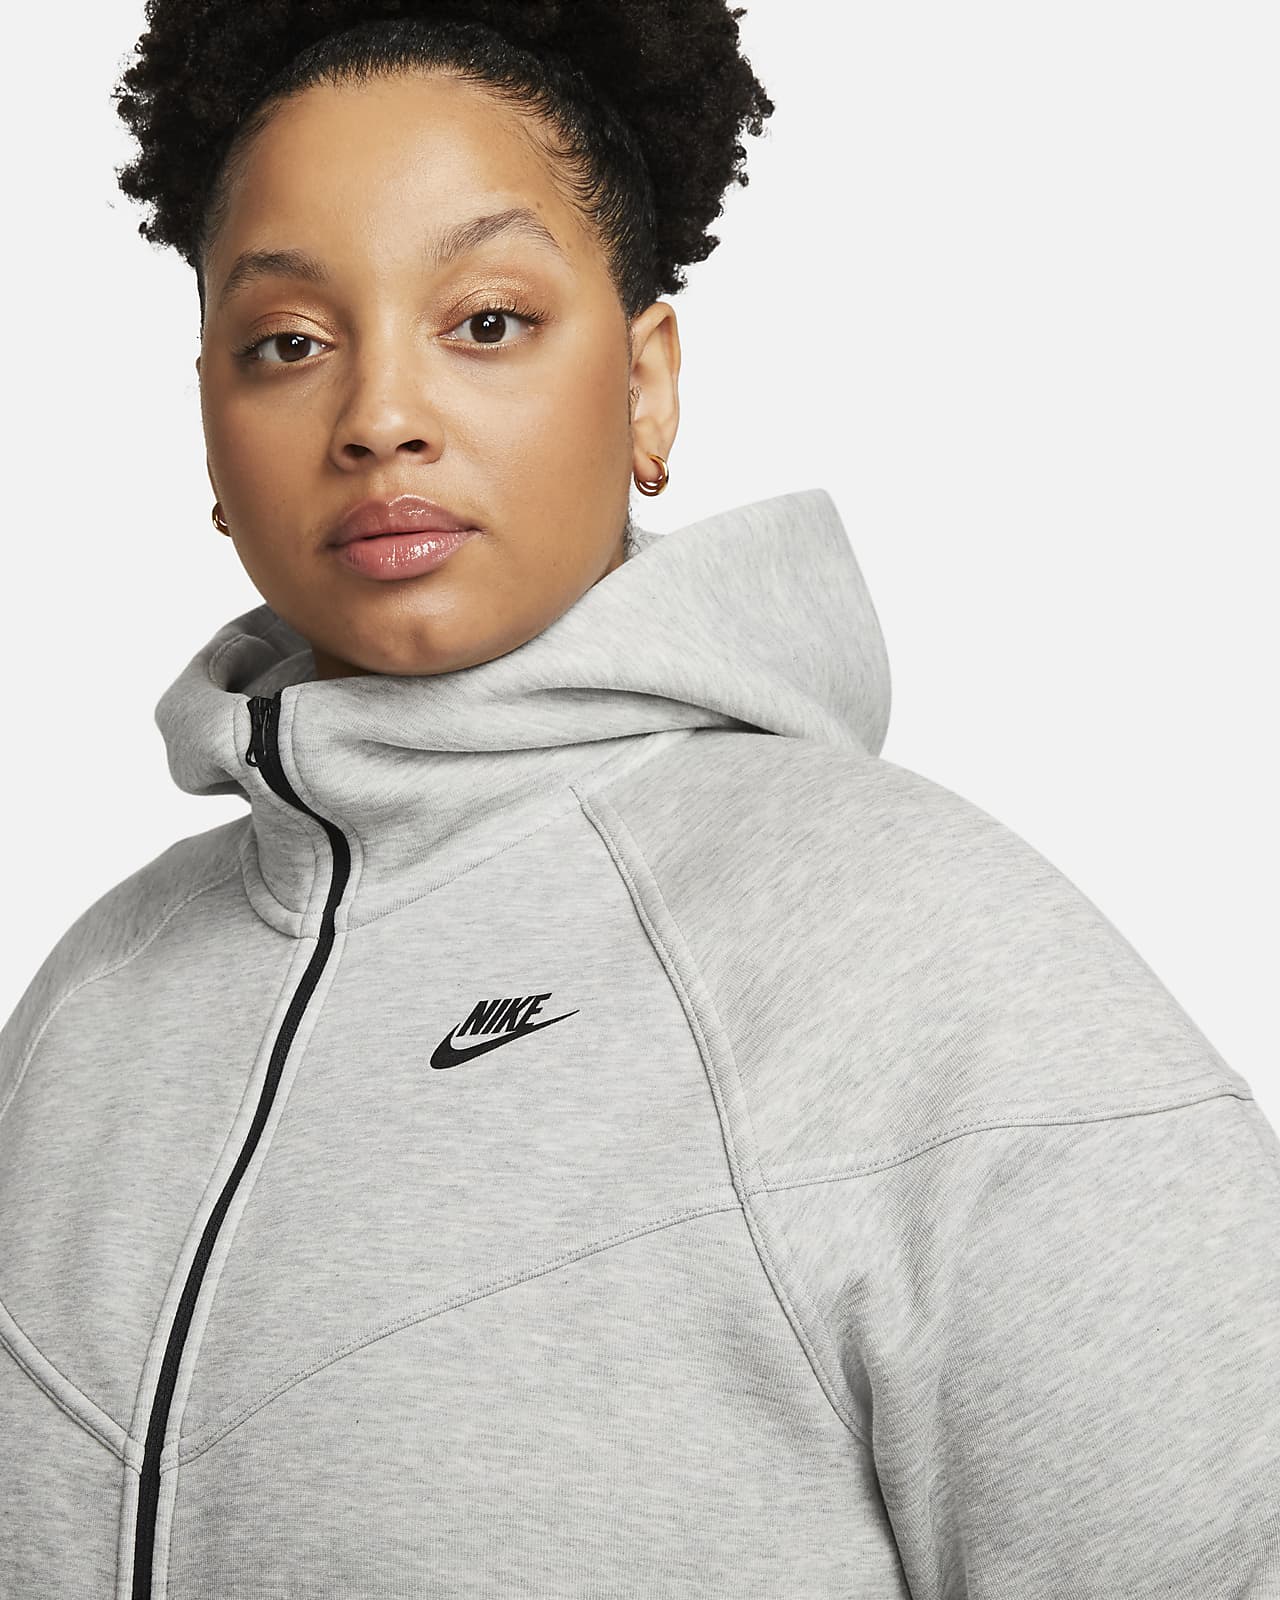 NWT Women's Nike Sportswear Nike Air Fleece Hoodie Plus Size 1X